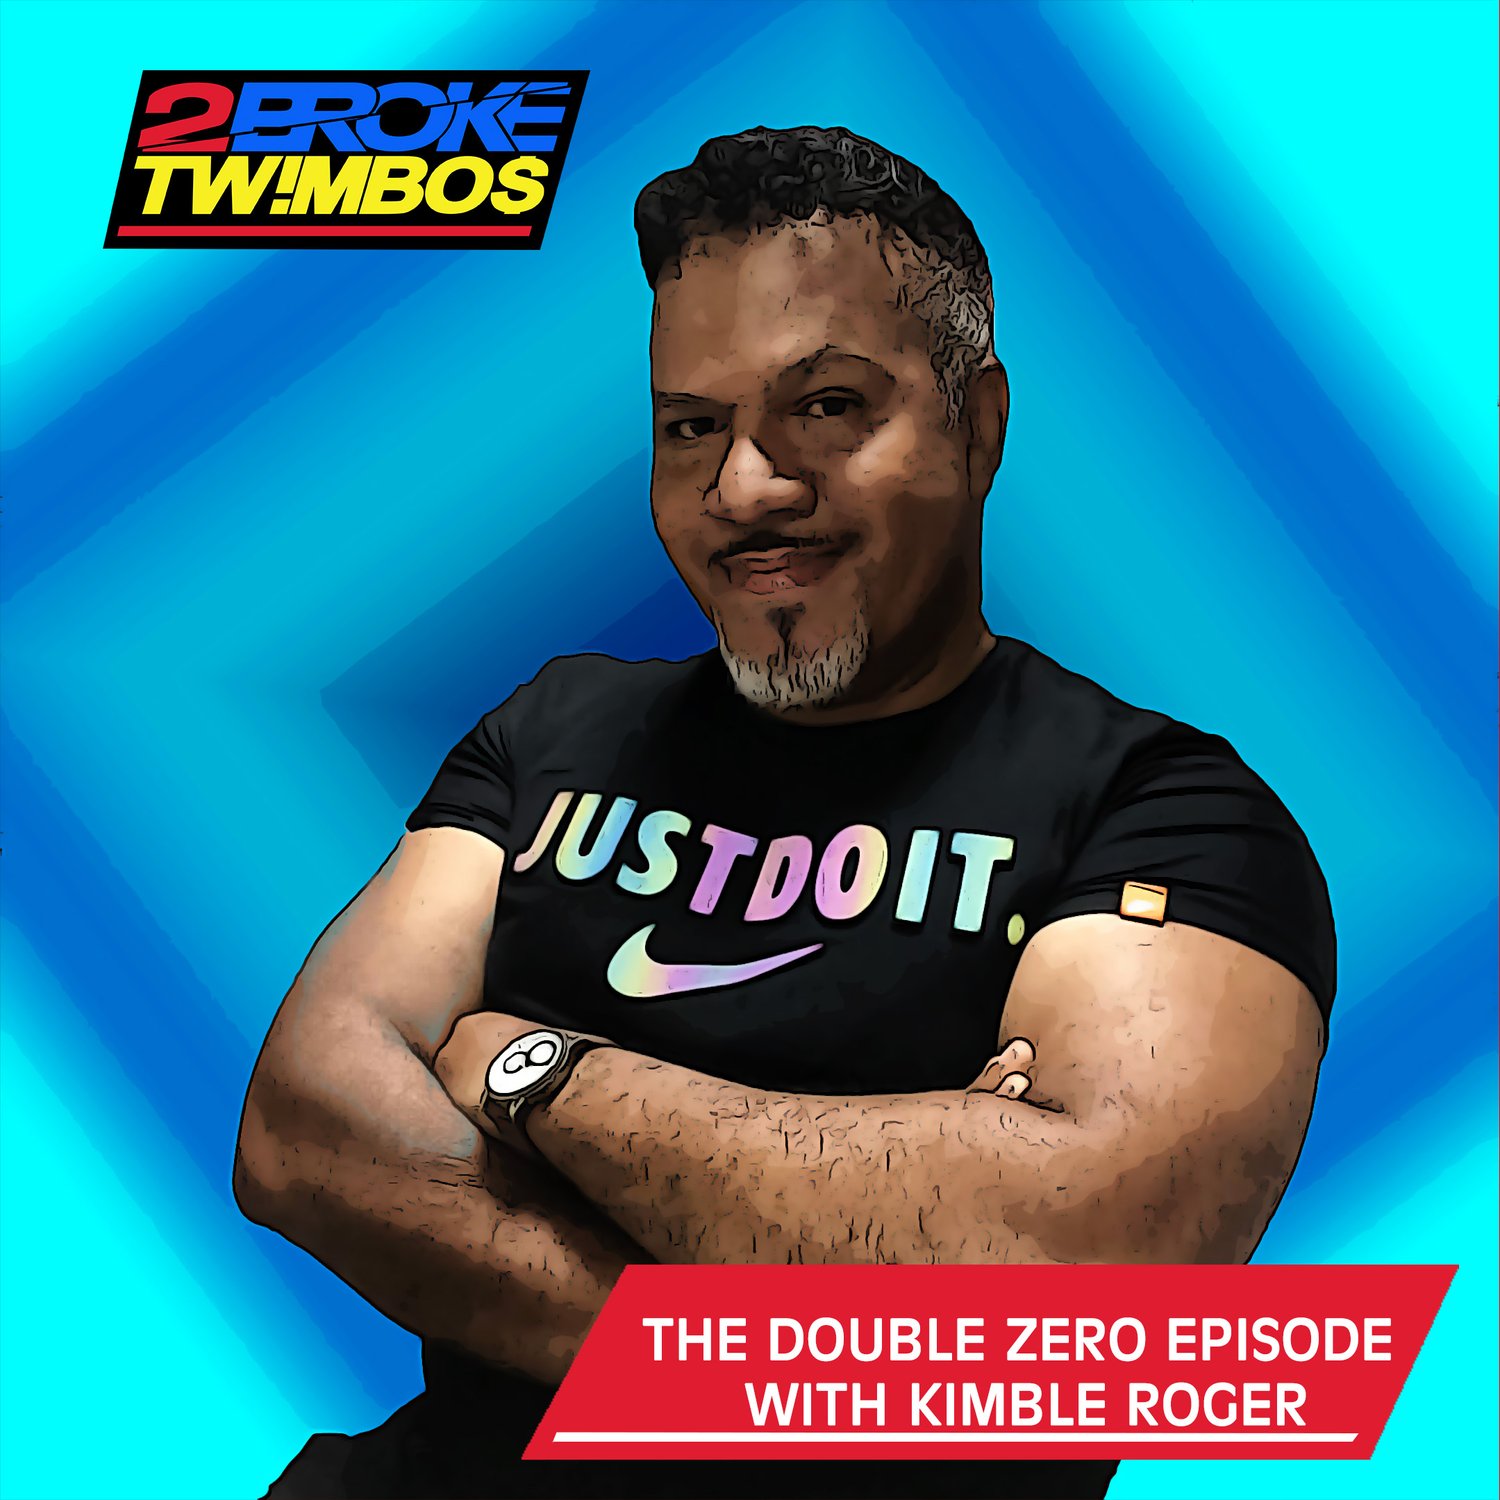 The Double Zero Episode with Kimble Rogers